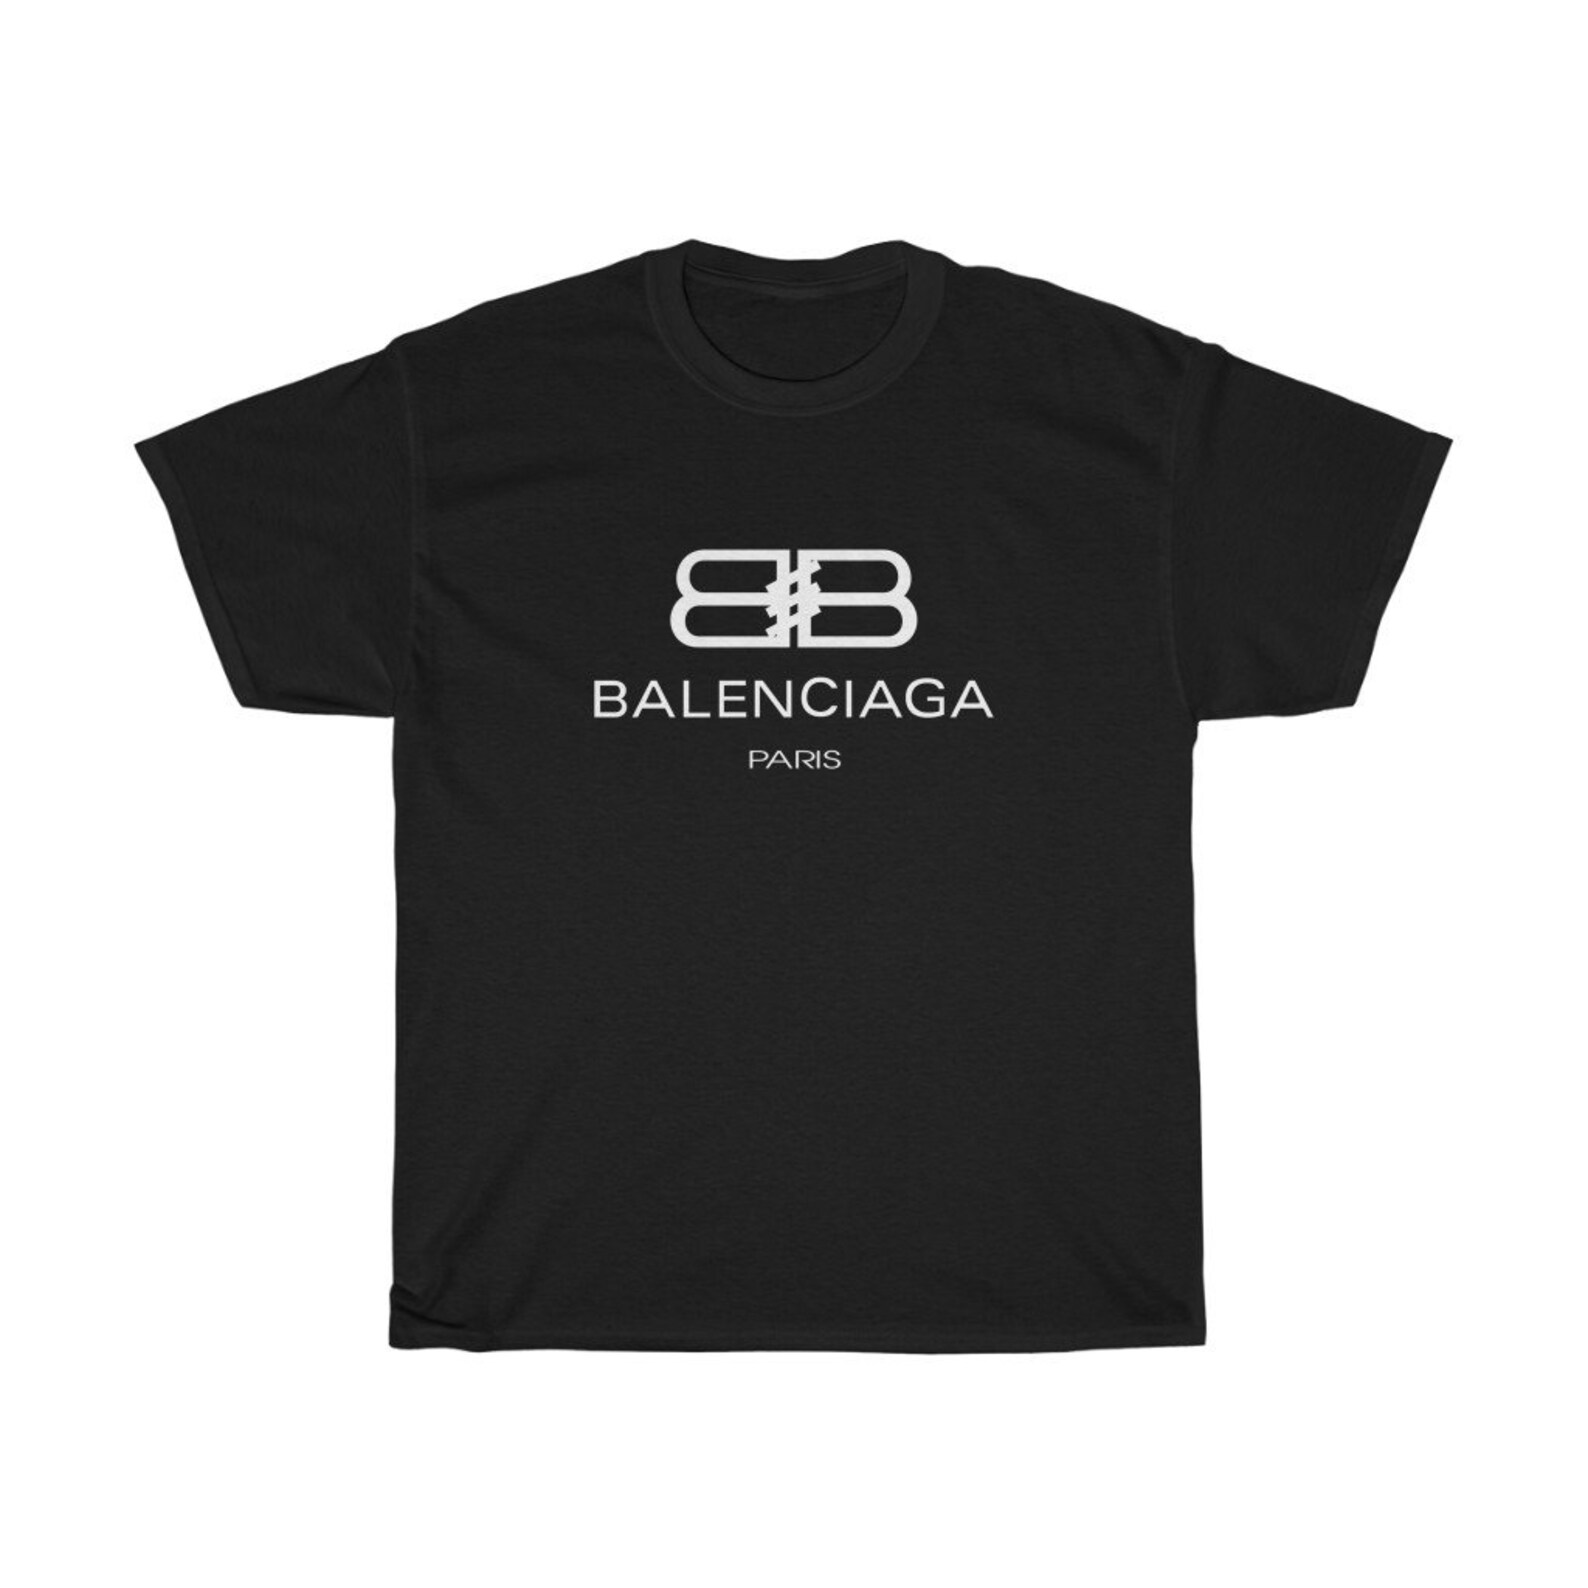 Balenciaga shirtBalenciaga tshirt Balenciaga Mens women | Etsy